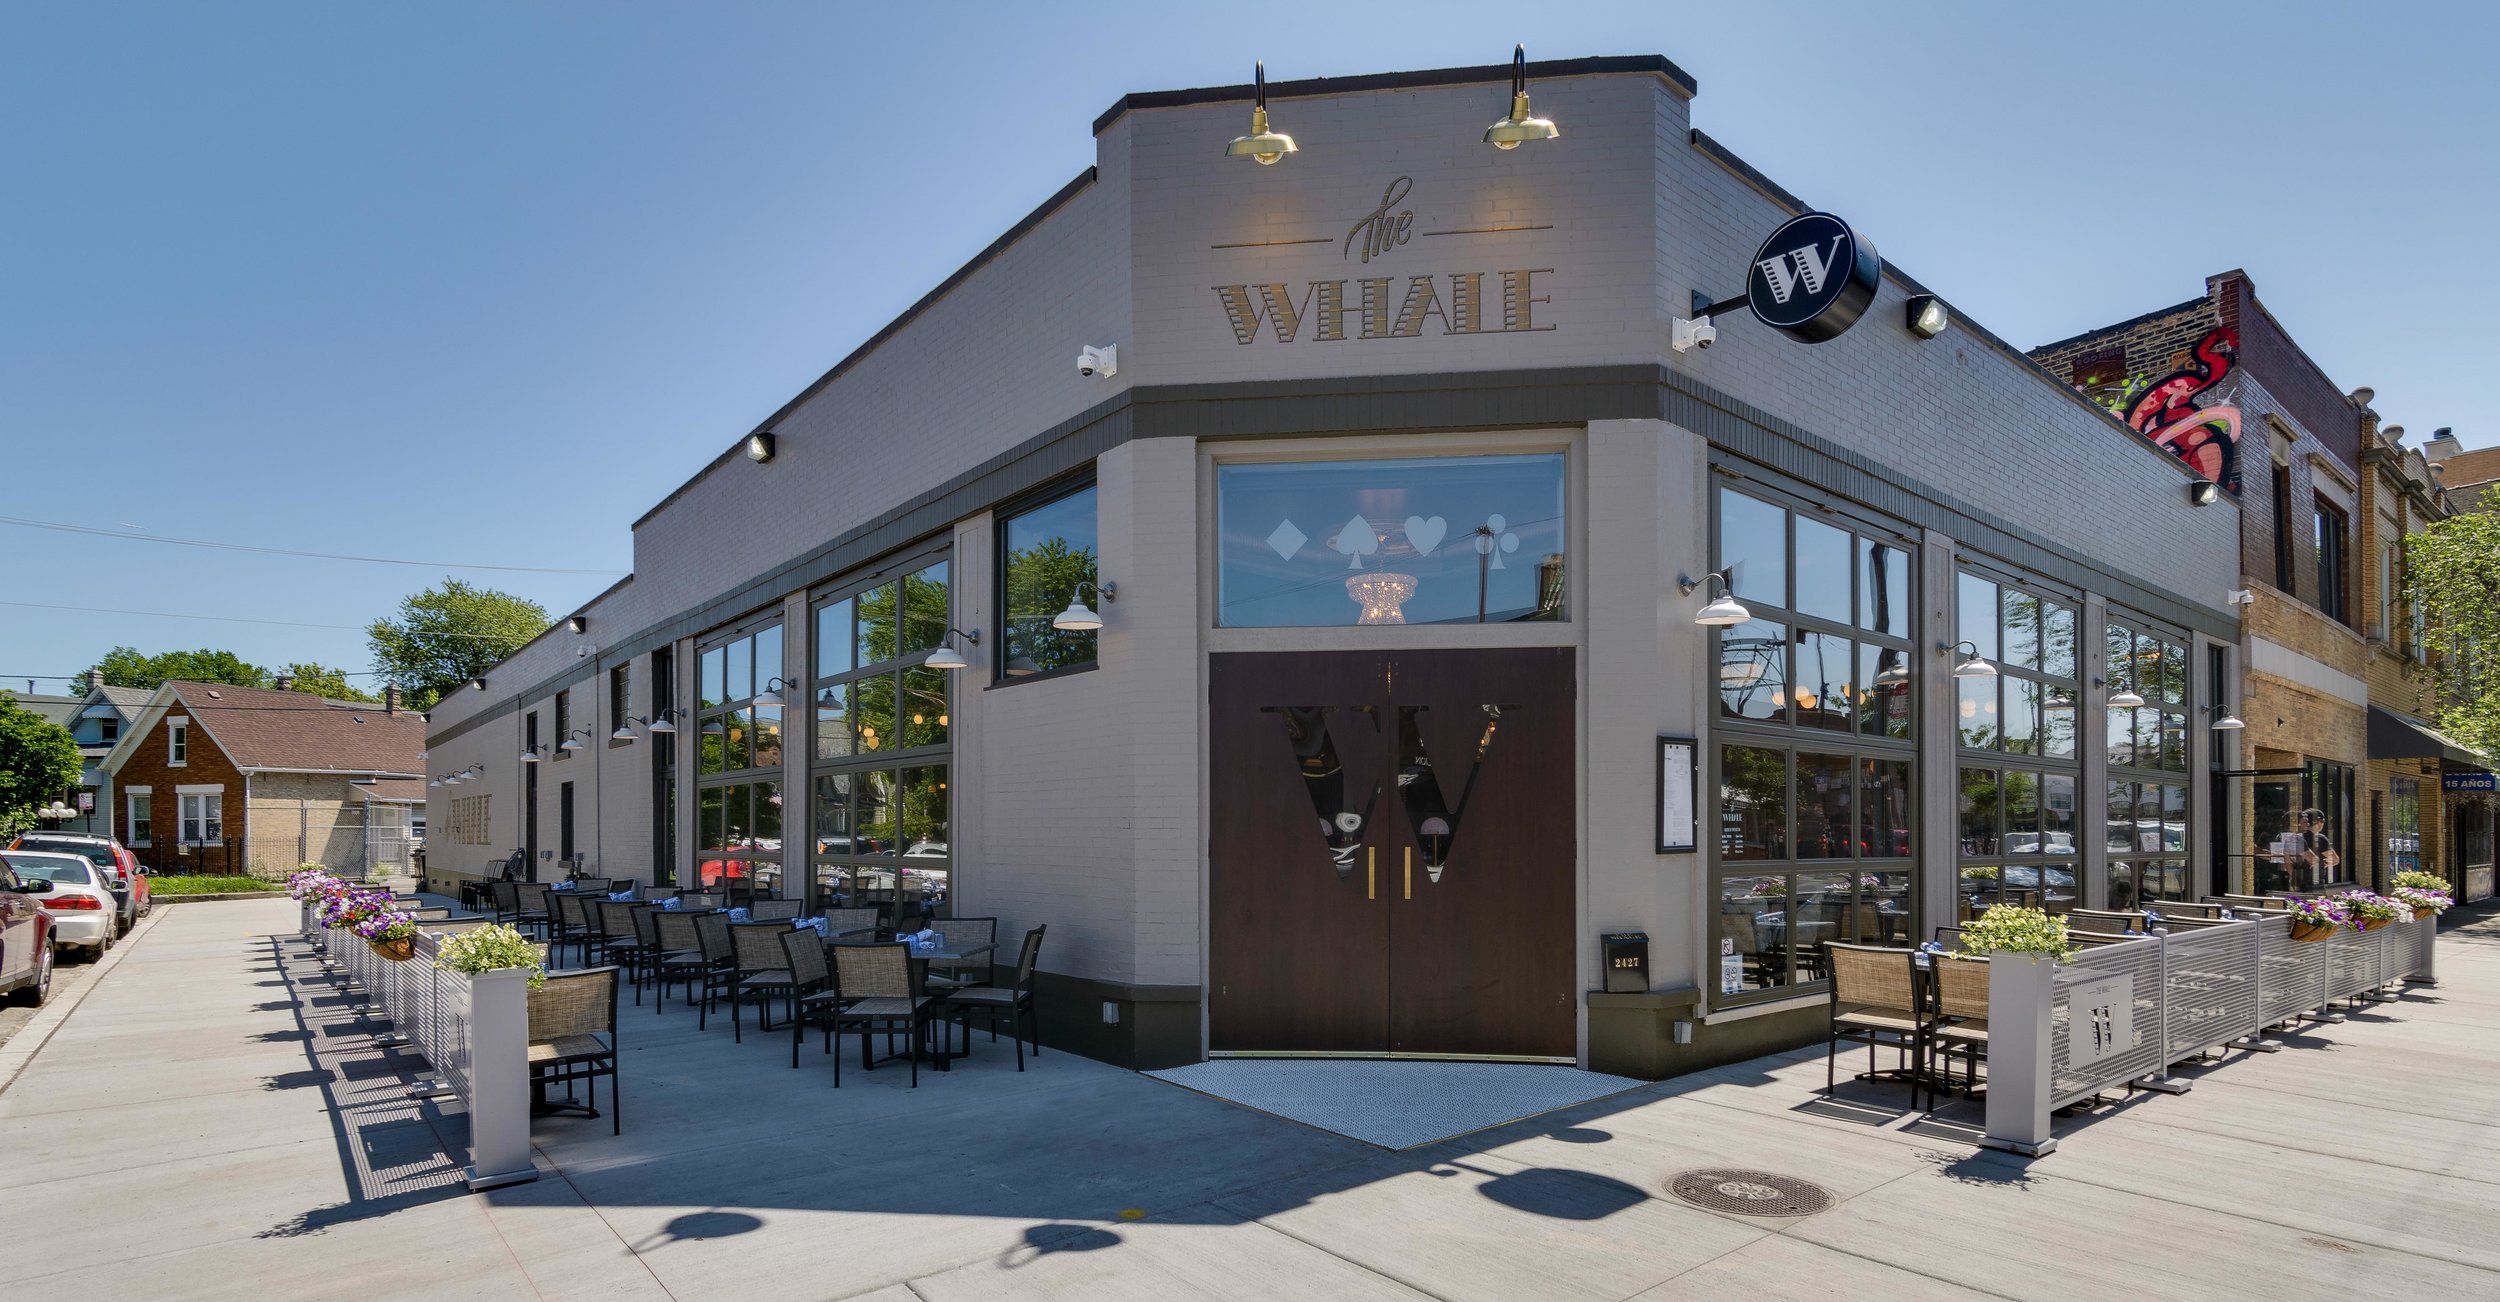 The Whale Restaurant - Web_015.jpg